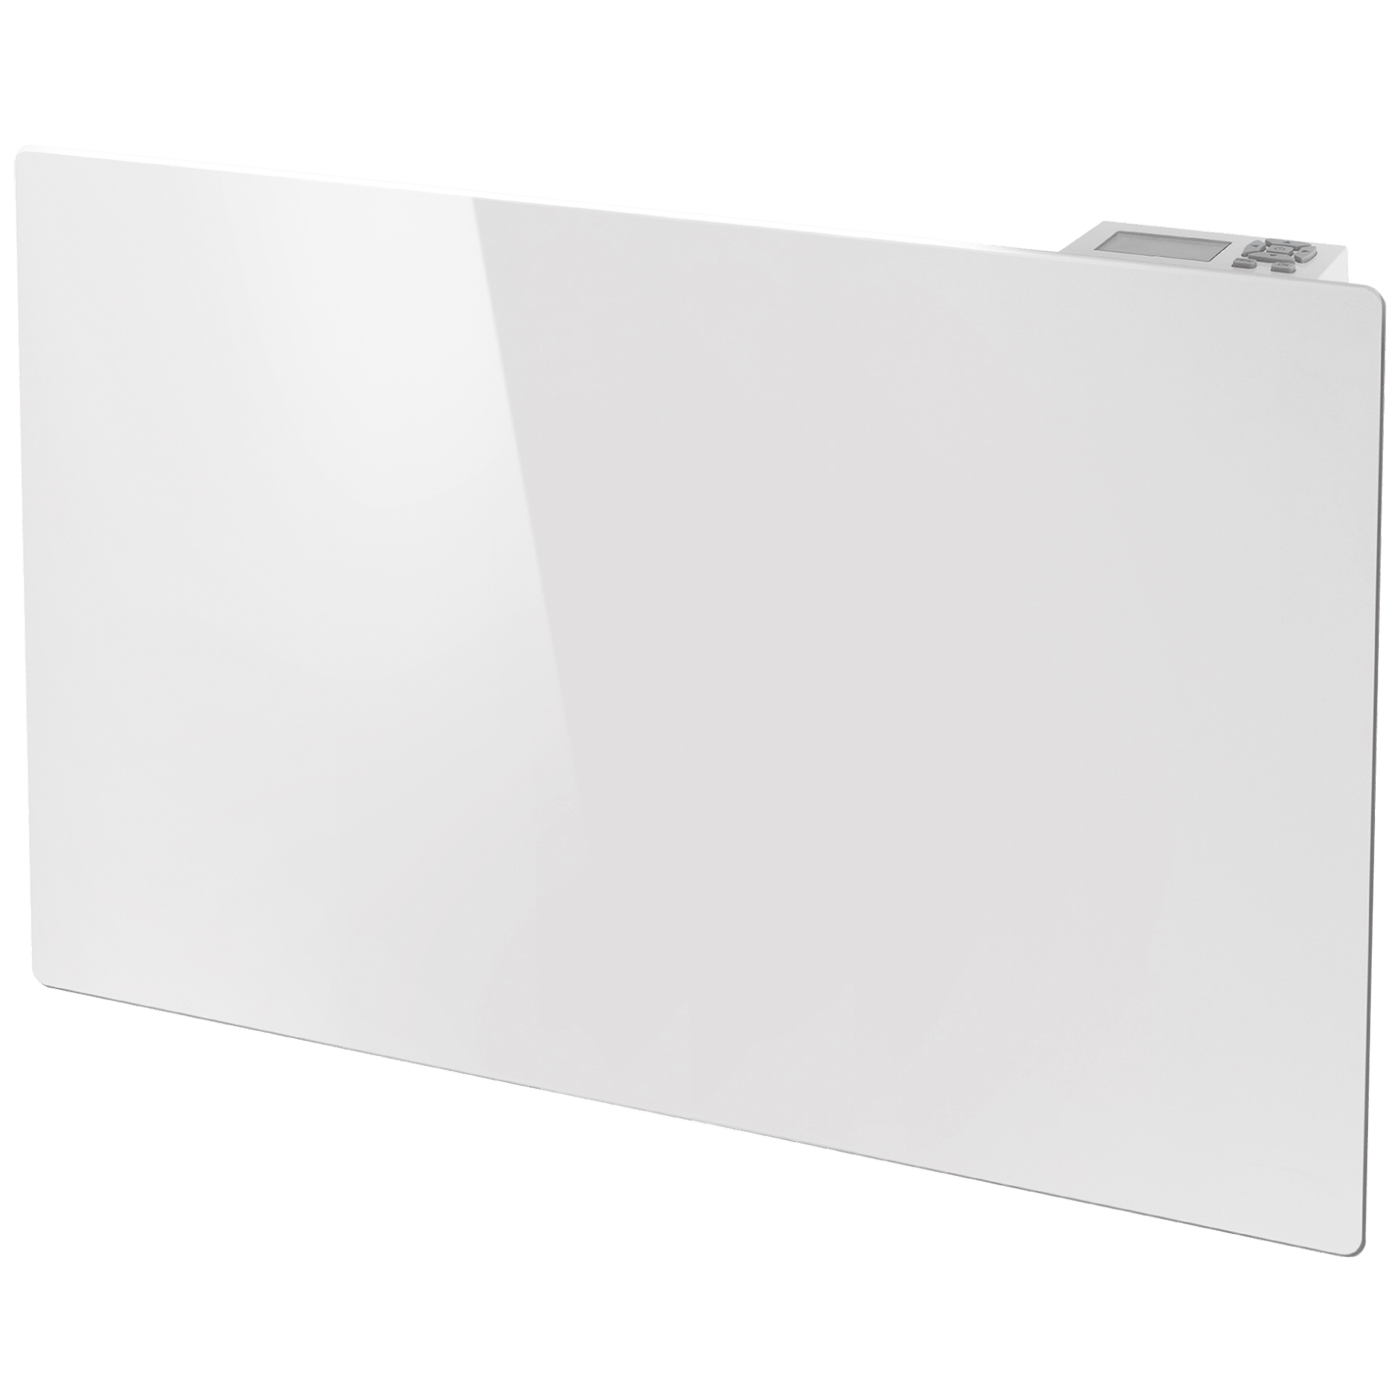 Grijalica zidna, konvektor, 2000 W, timer, LCD zaslon